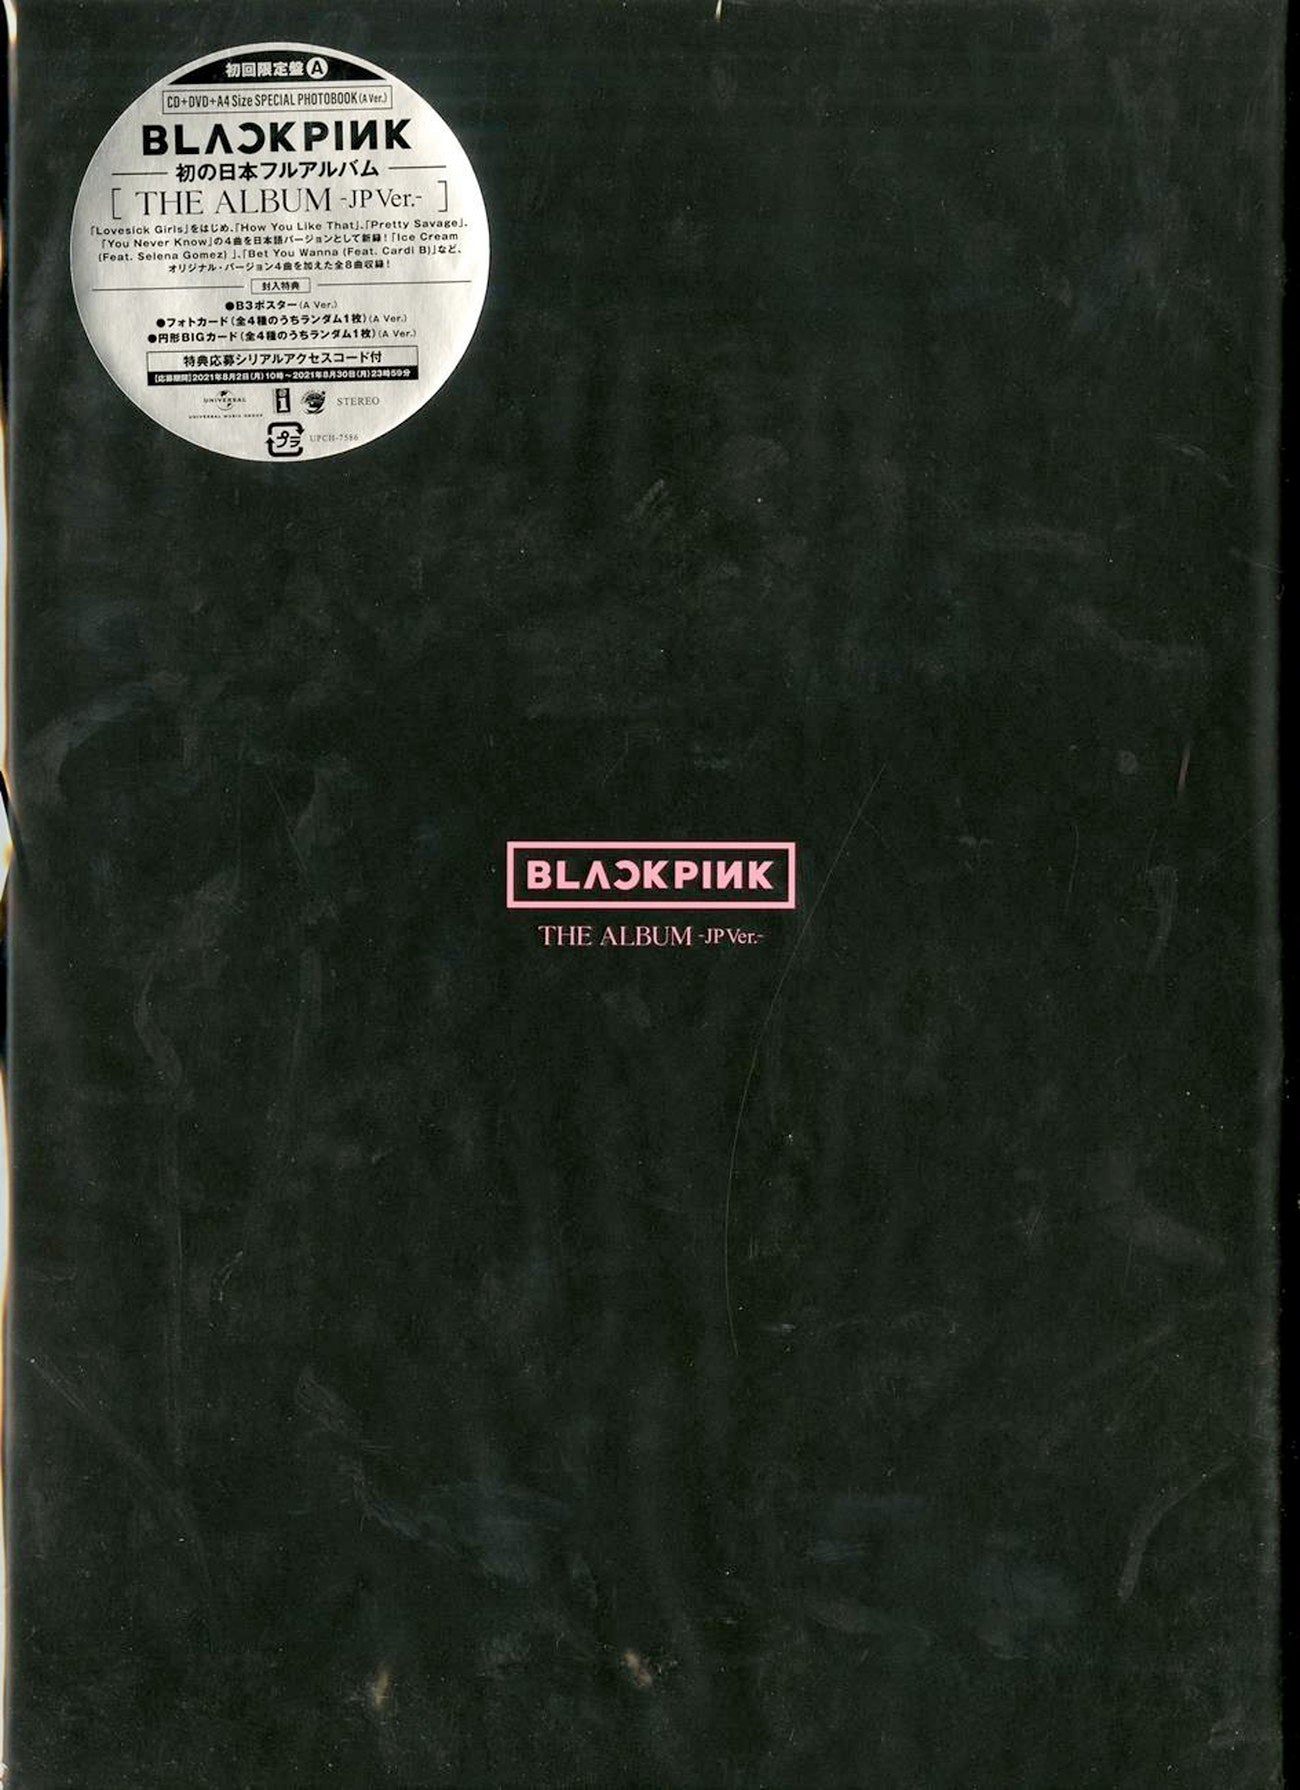 Blackpink - The Album -Jp Ver.- (Type-A) - Japan CD+DVD+Book